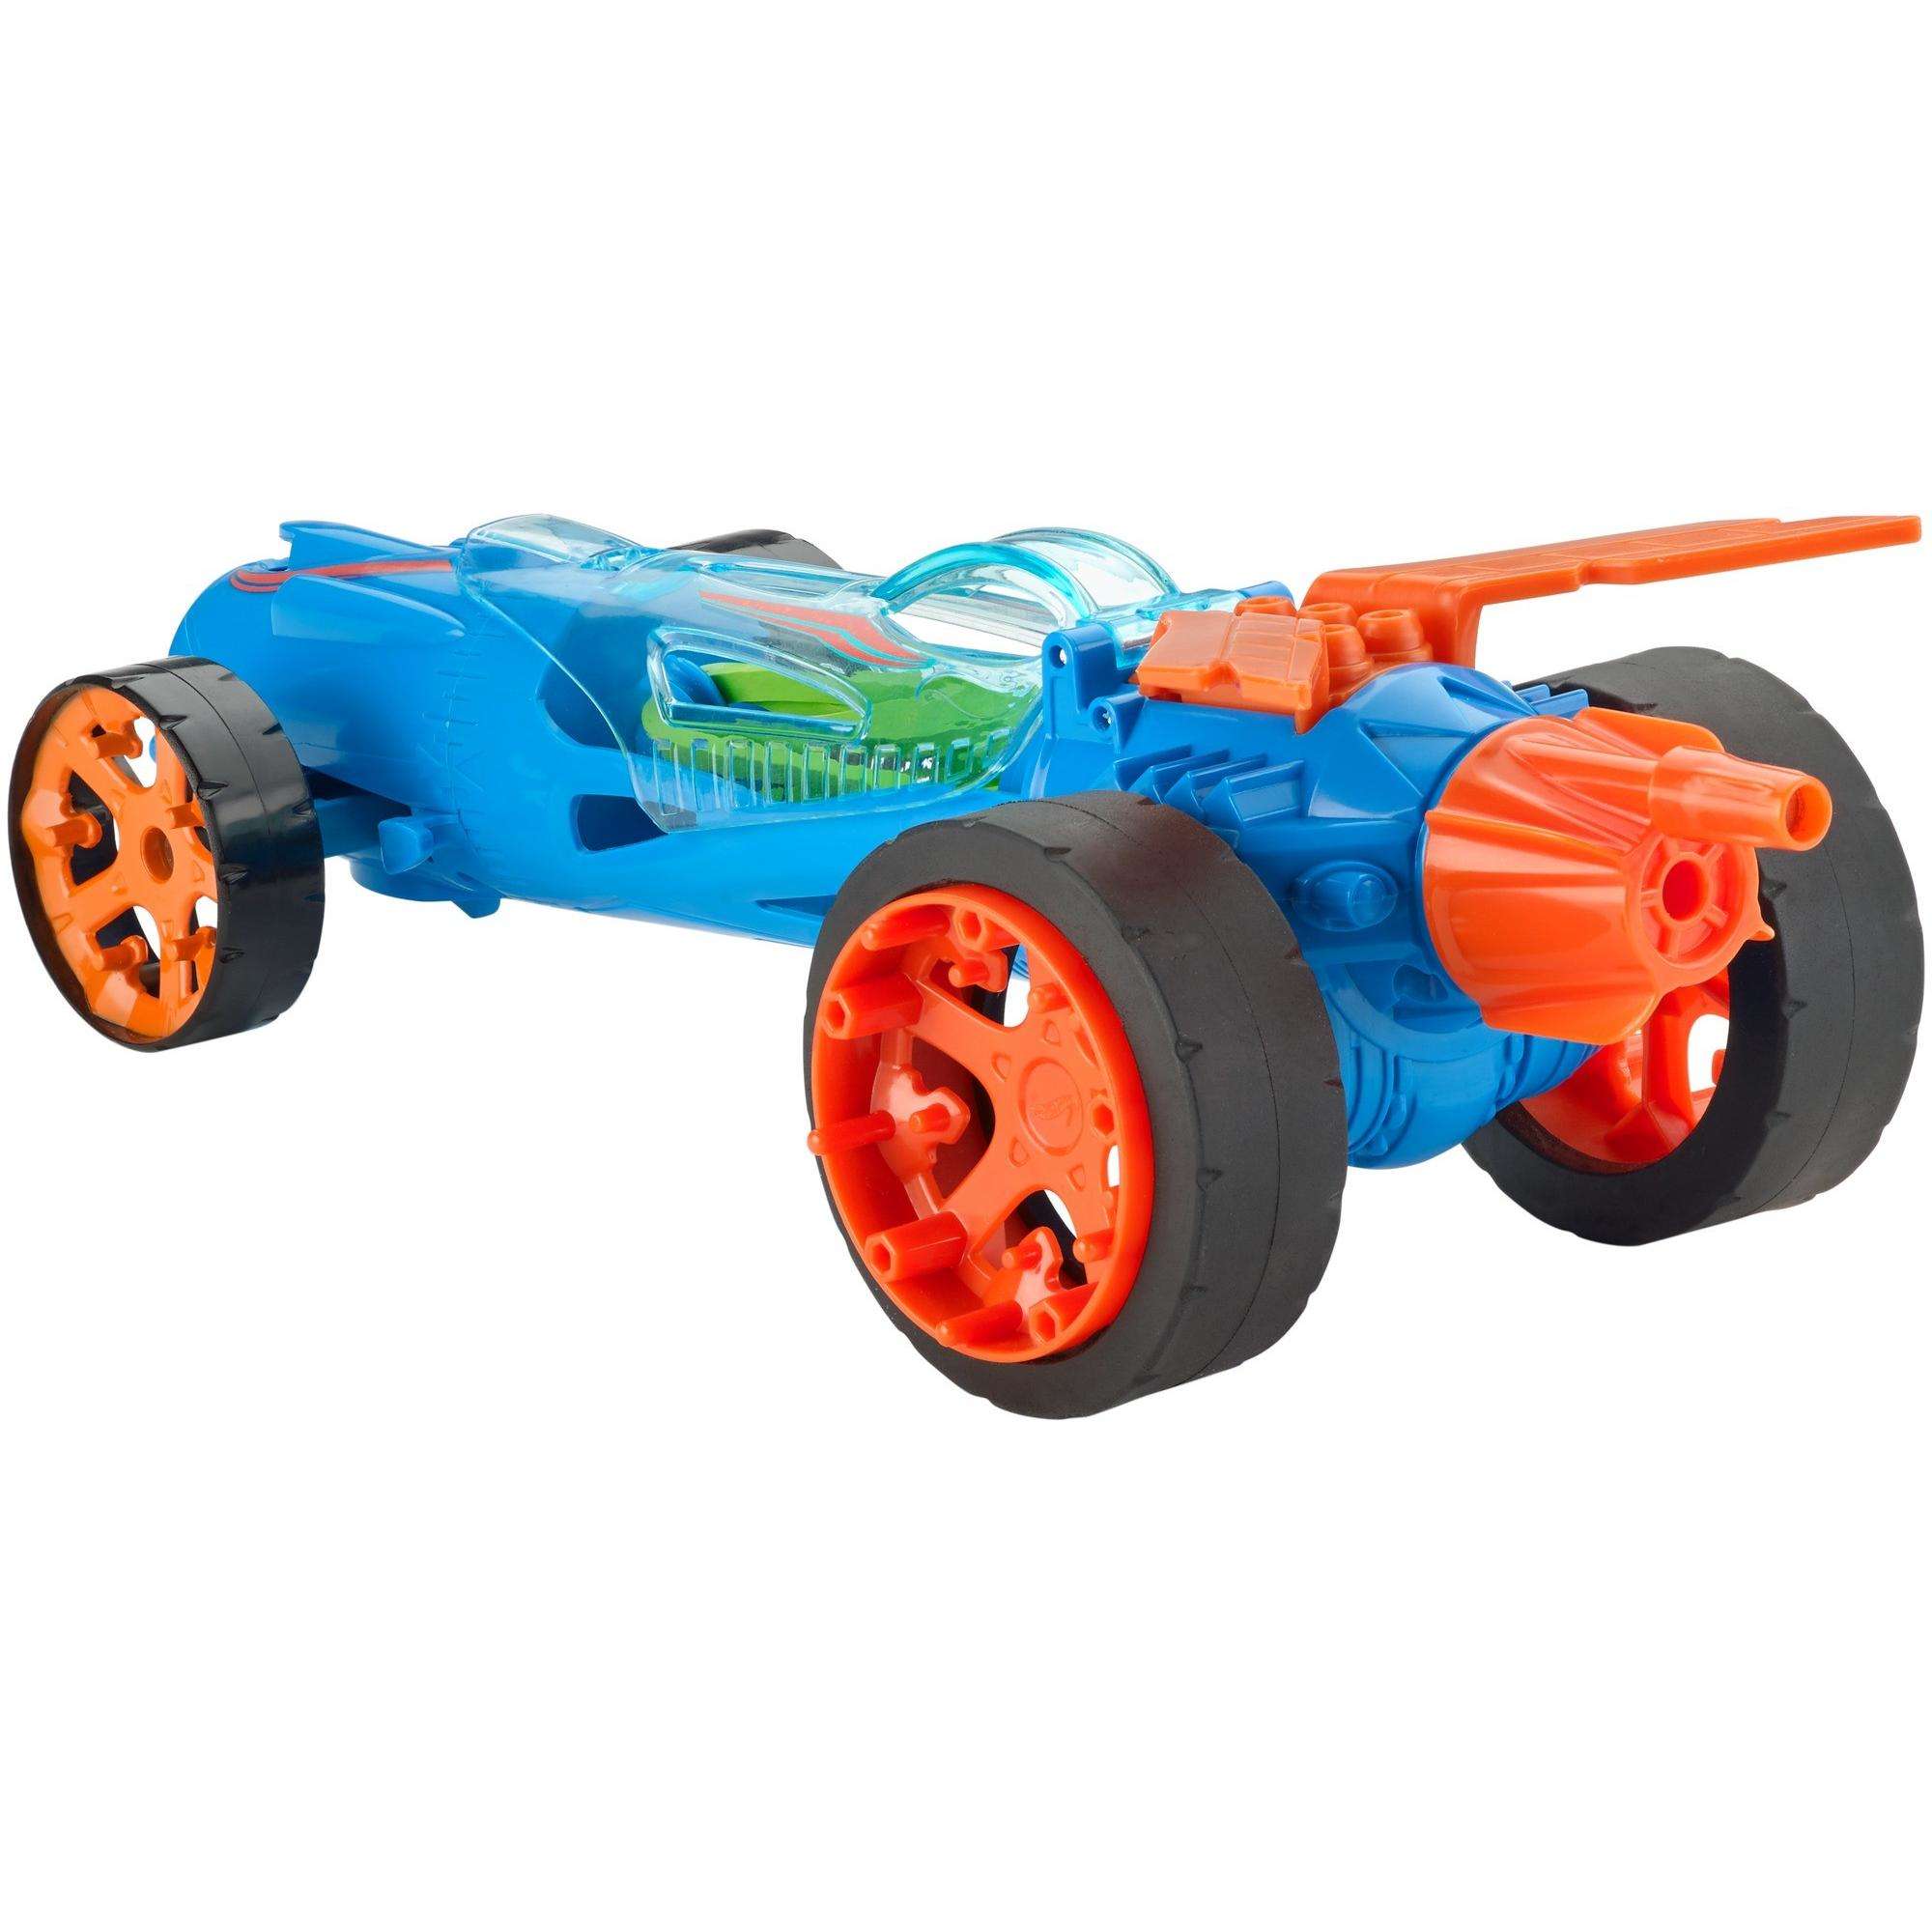 Hot Wheels Speed Winders Torque Twister Vehicle - Blue - image 3 of 5